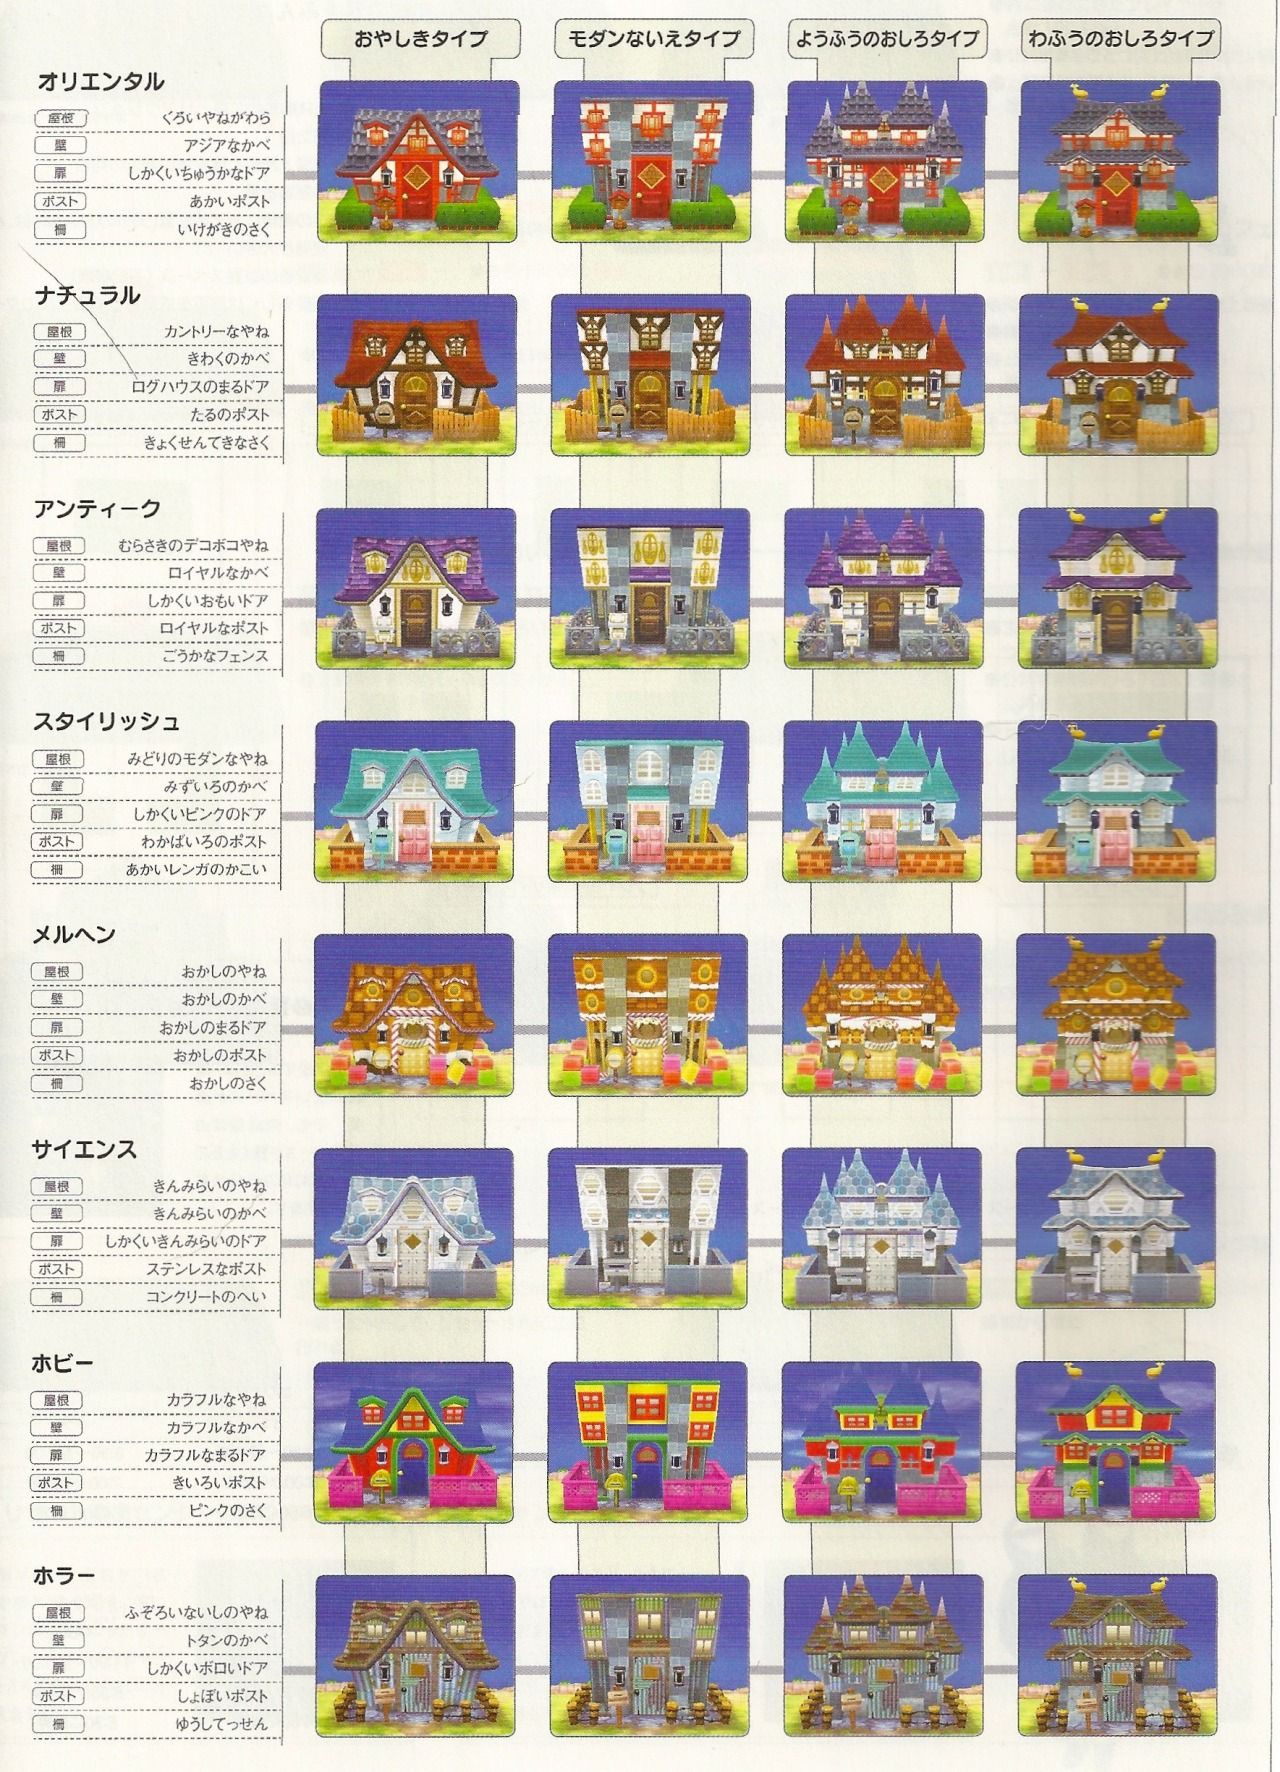 weeradish “ Animal Crossing New Leaf house exterior options Dezain No Aru Kurashi Tobidase Dobutsu No Mori Japan Enterbrain 2013 Print ”